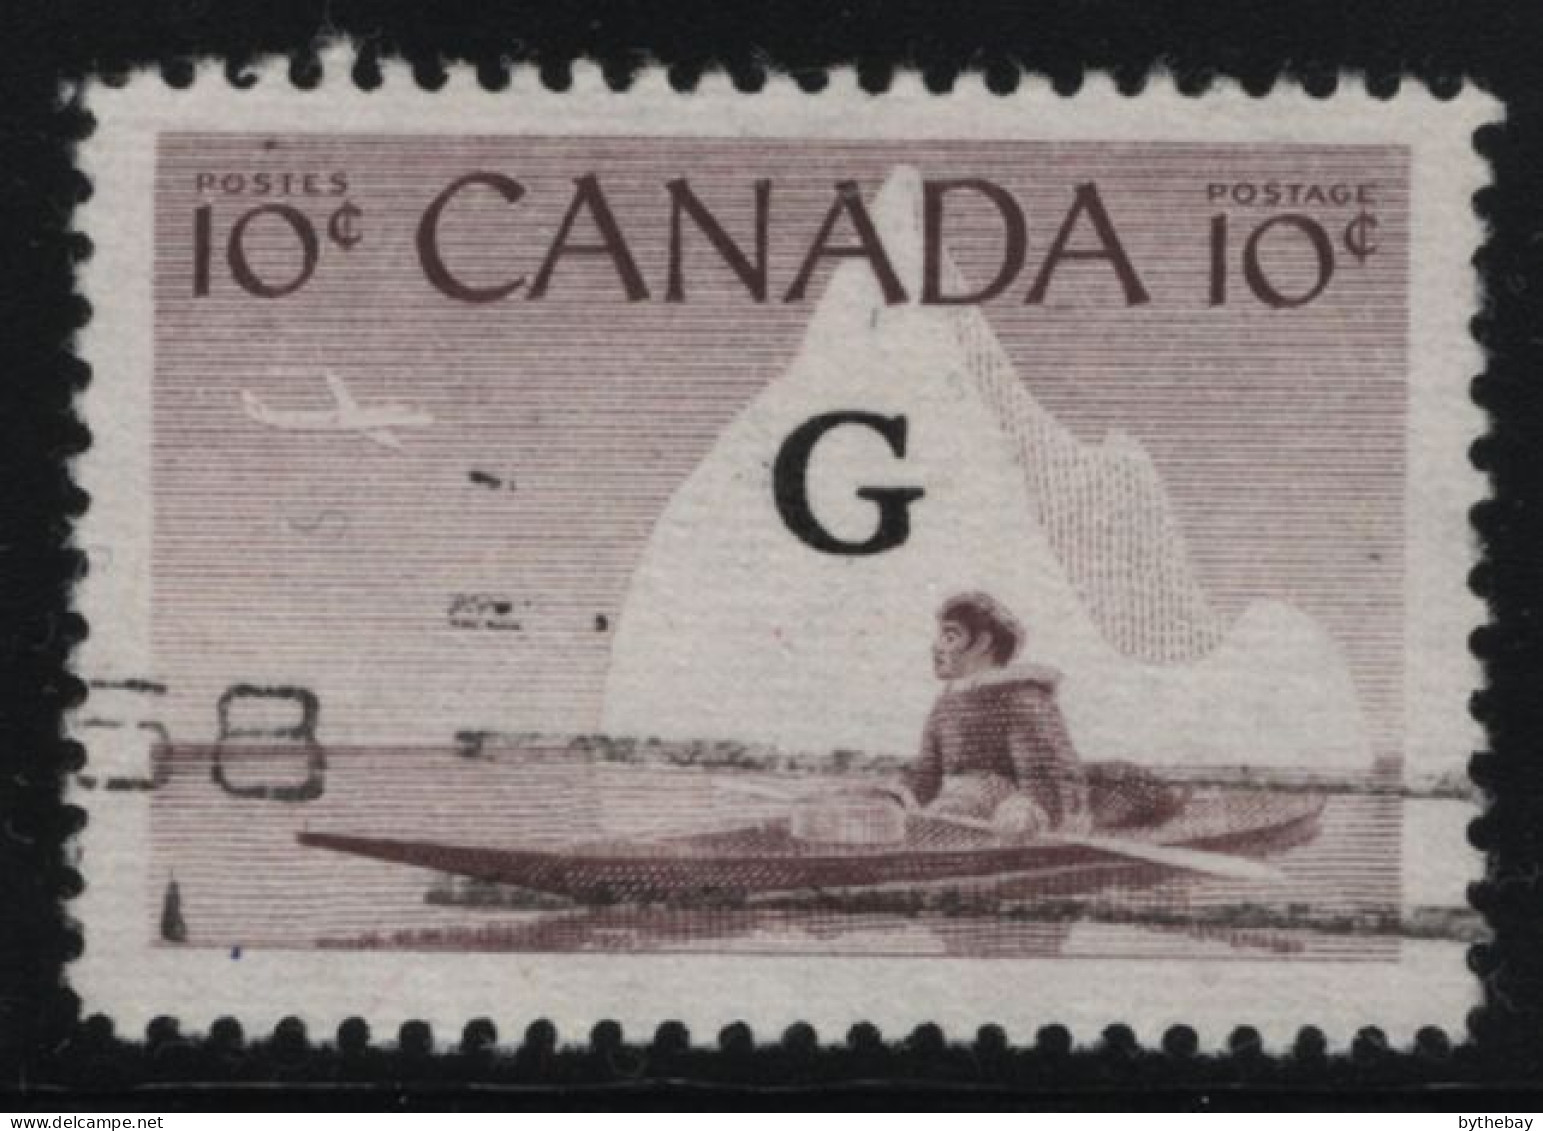 Canada 1953-55 Used Sc O39 10c Inuk, Kayak G Overprint - Overprinted